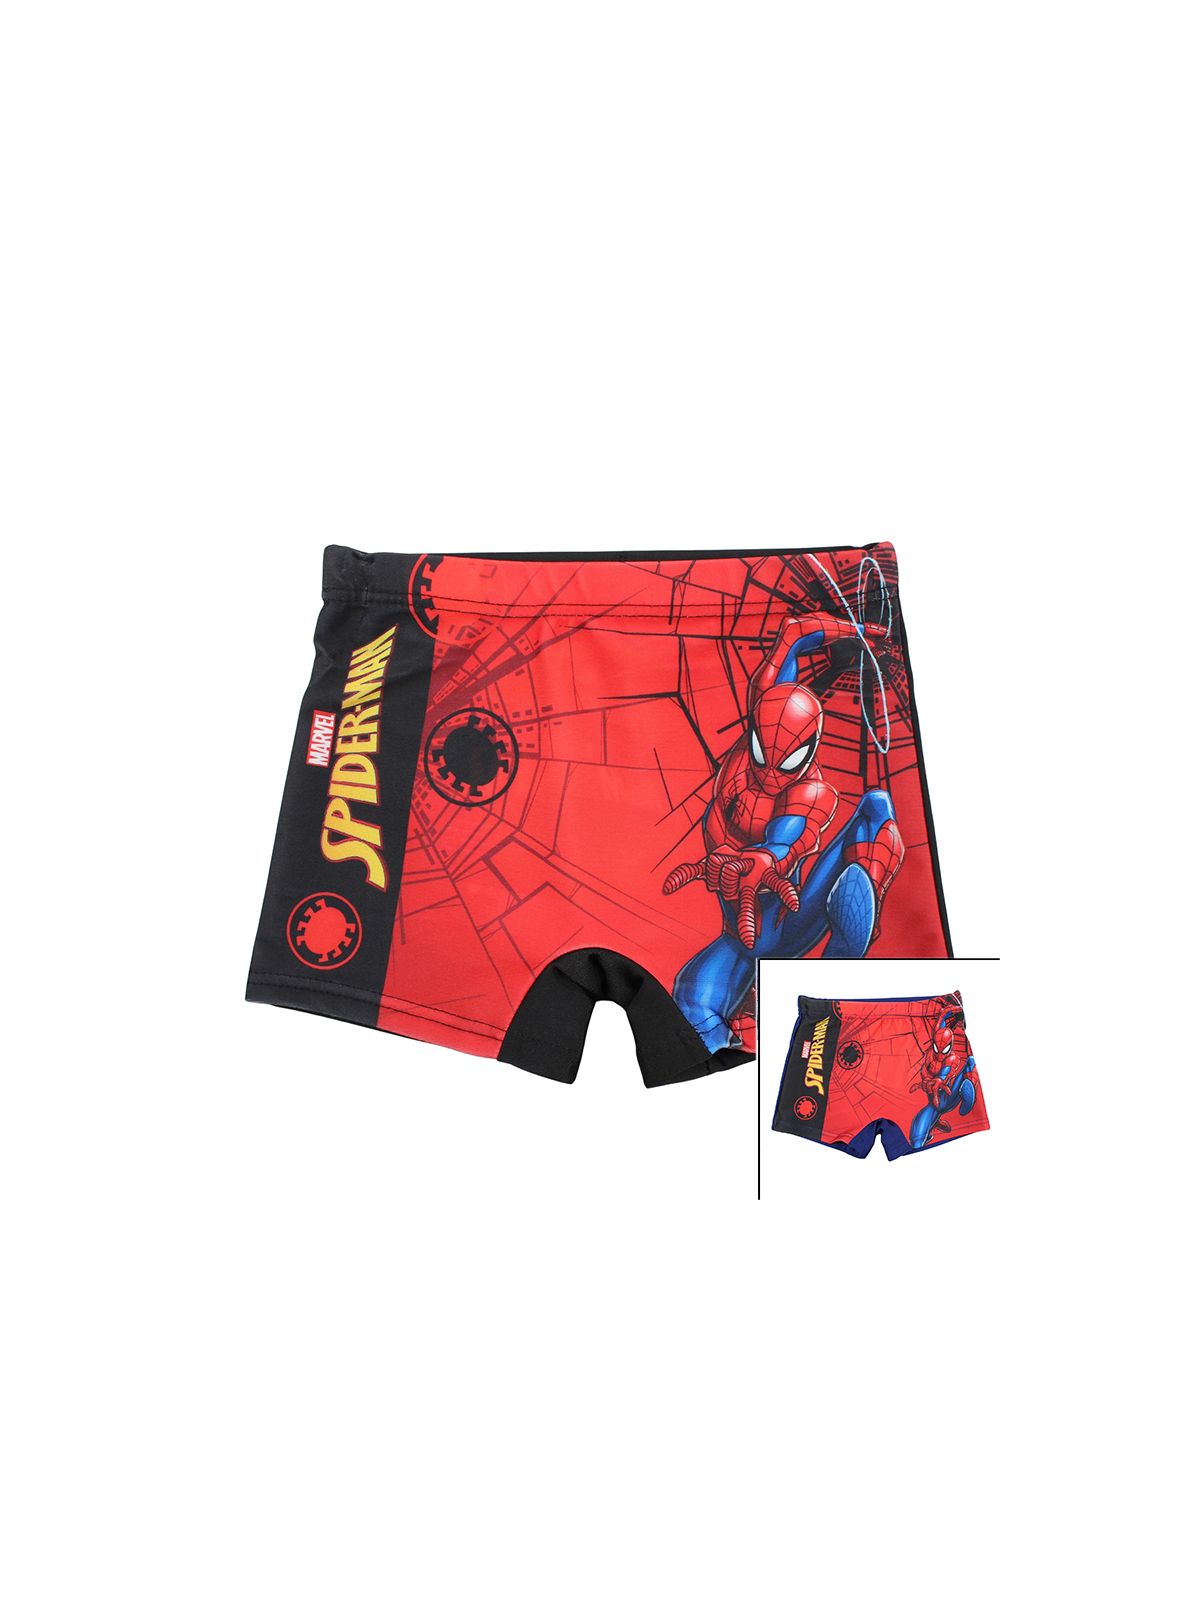 Spiderman swim trunks.